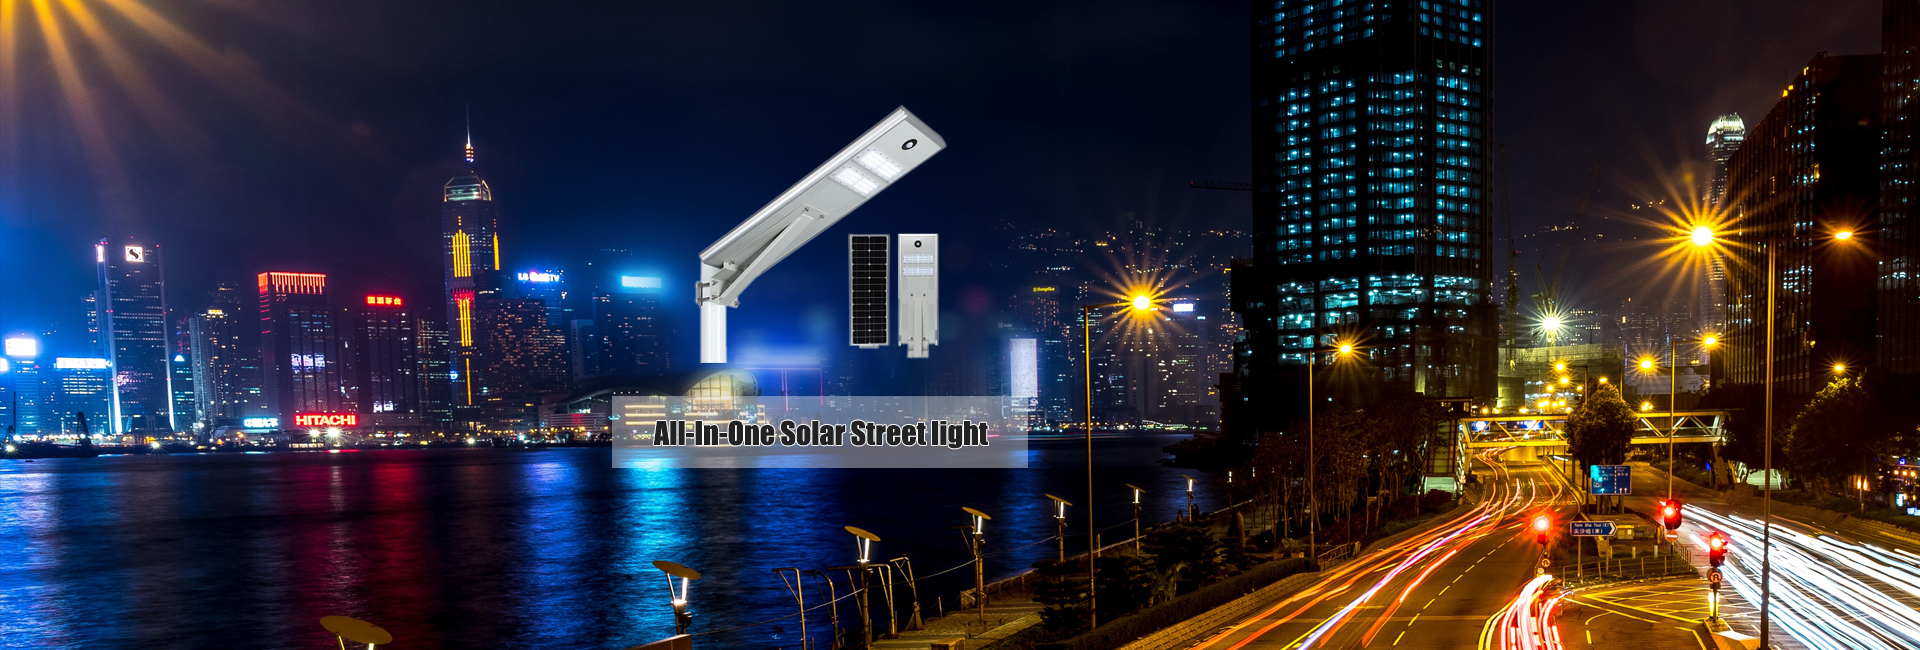 All-In-One Solar Street light